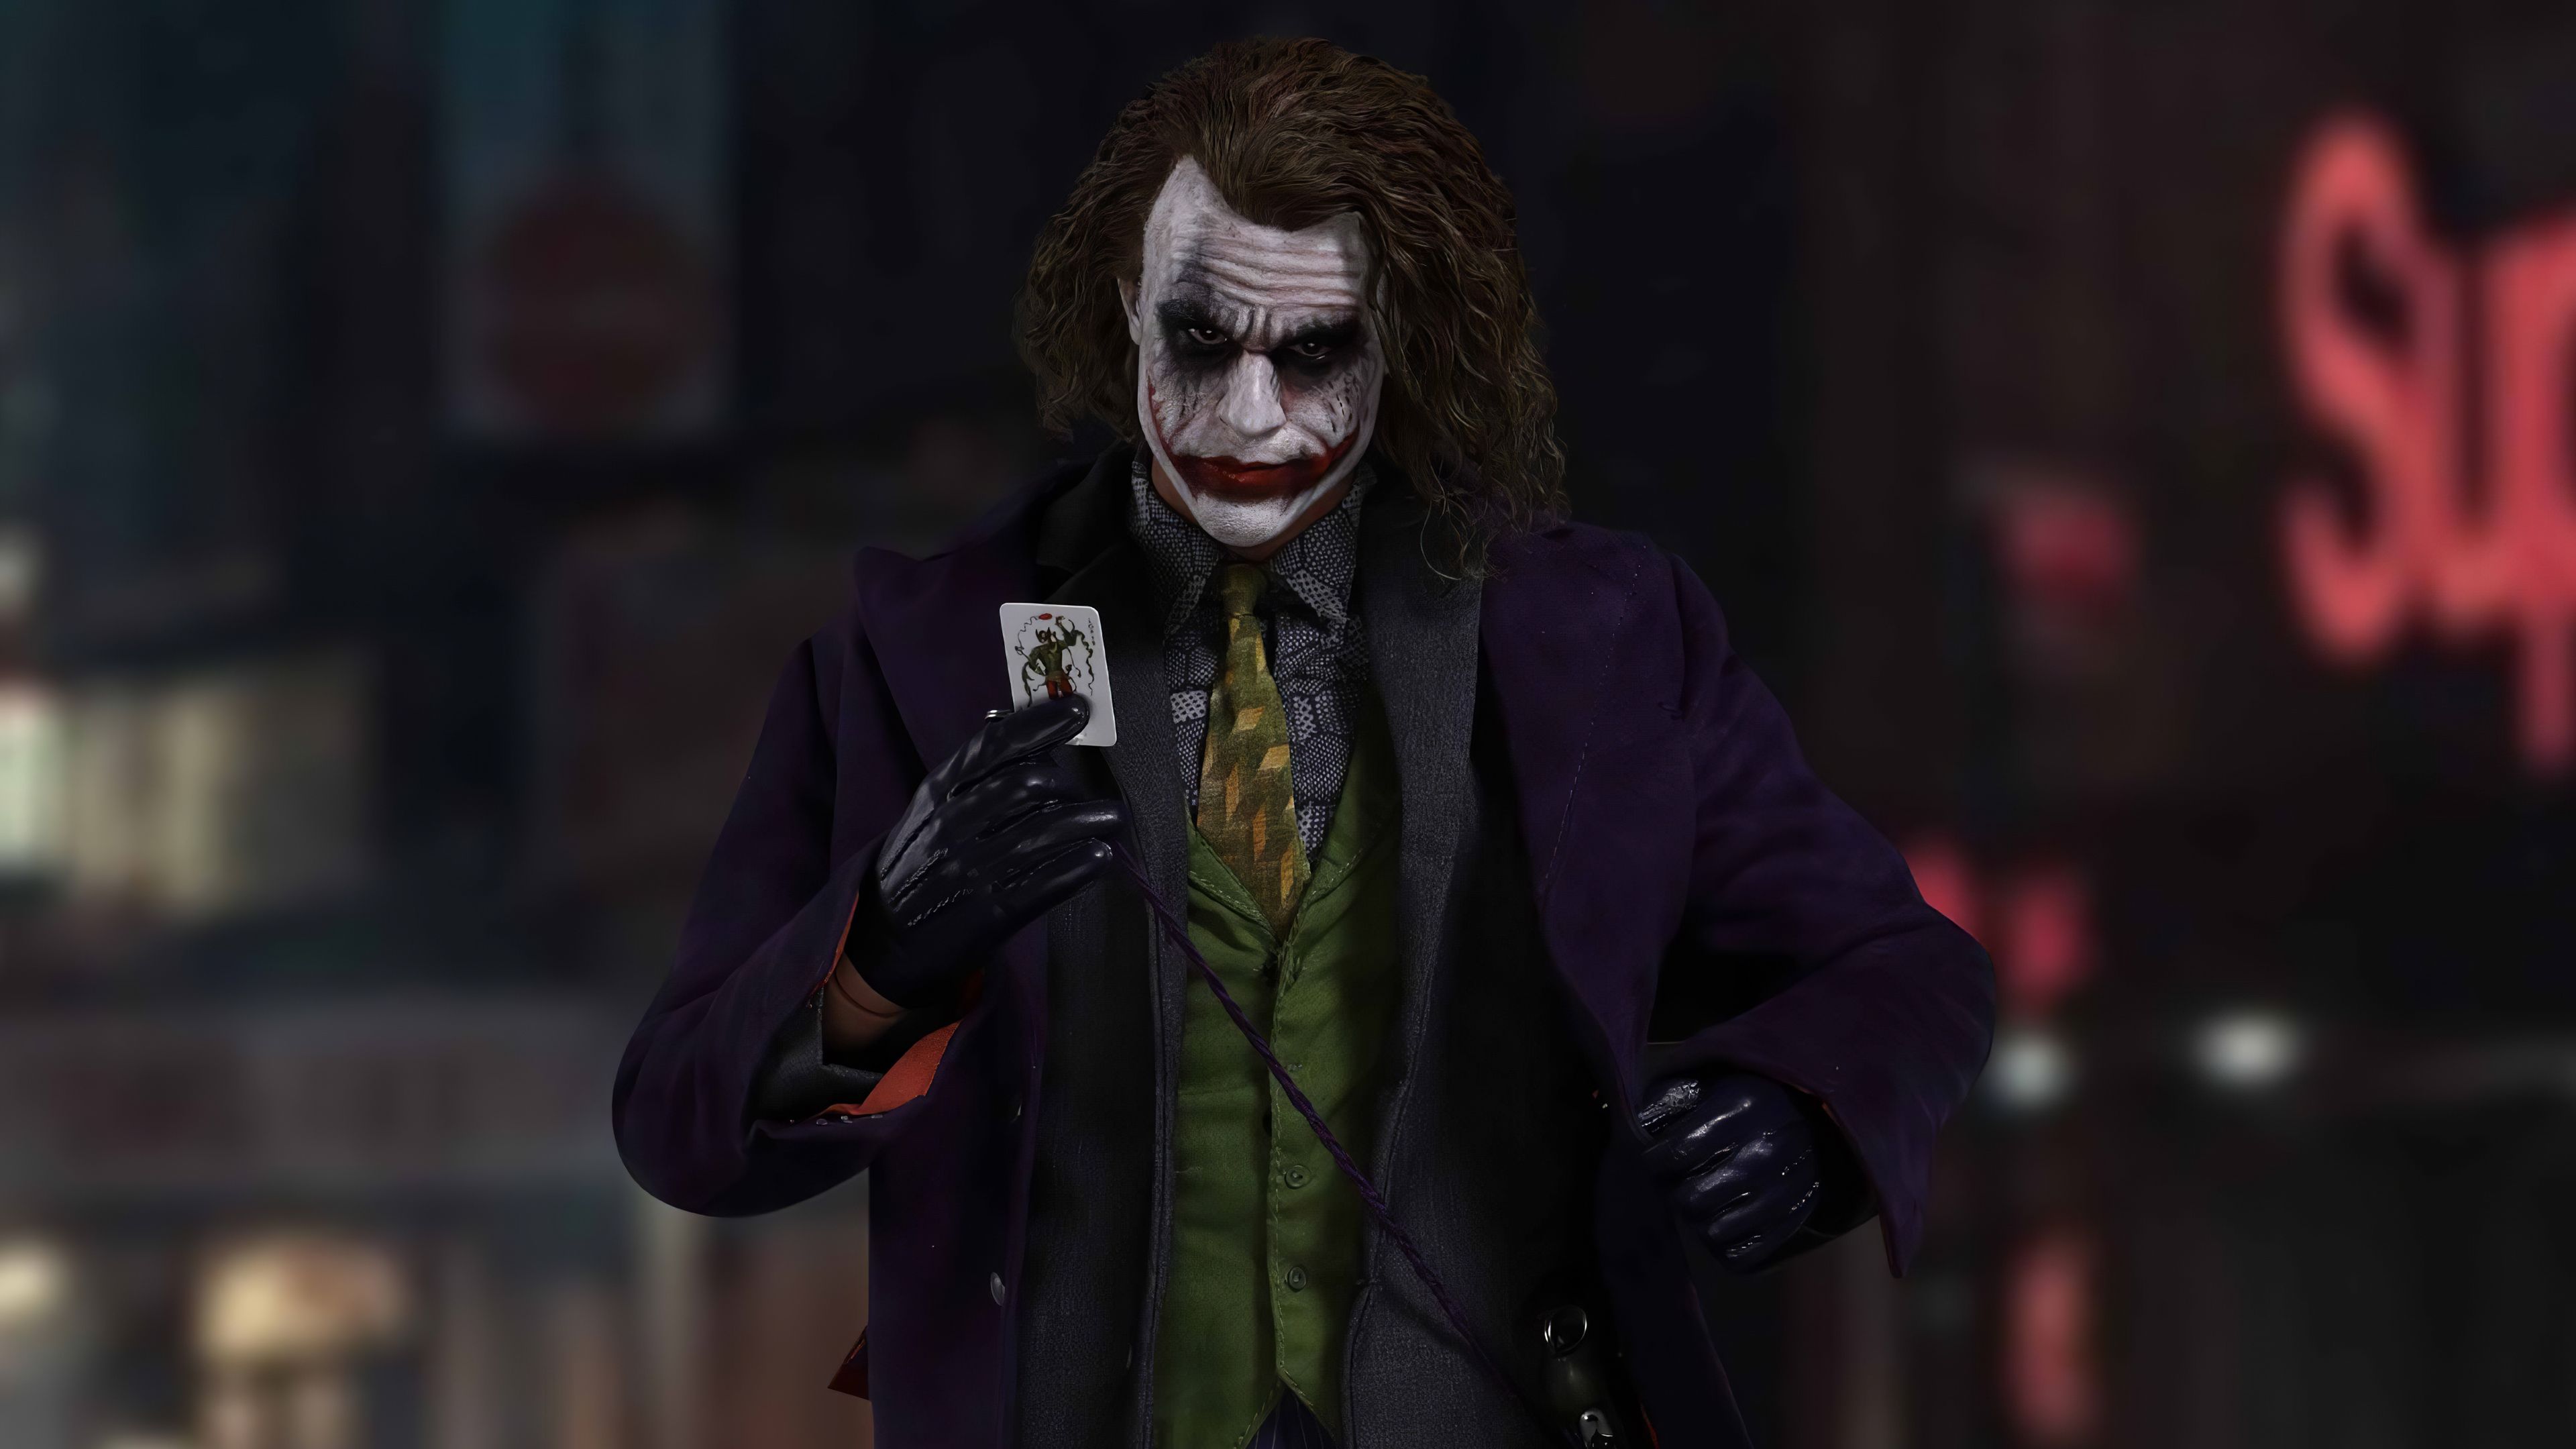 4k Joker 2020 Art, HD Superheroes, 4k Wallpapers, Image